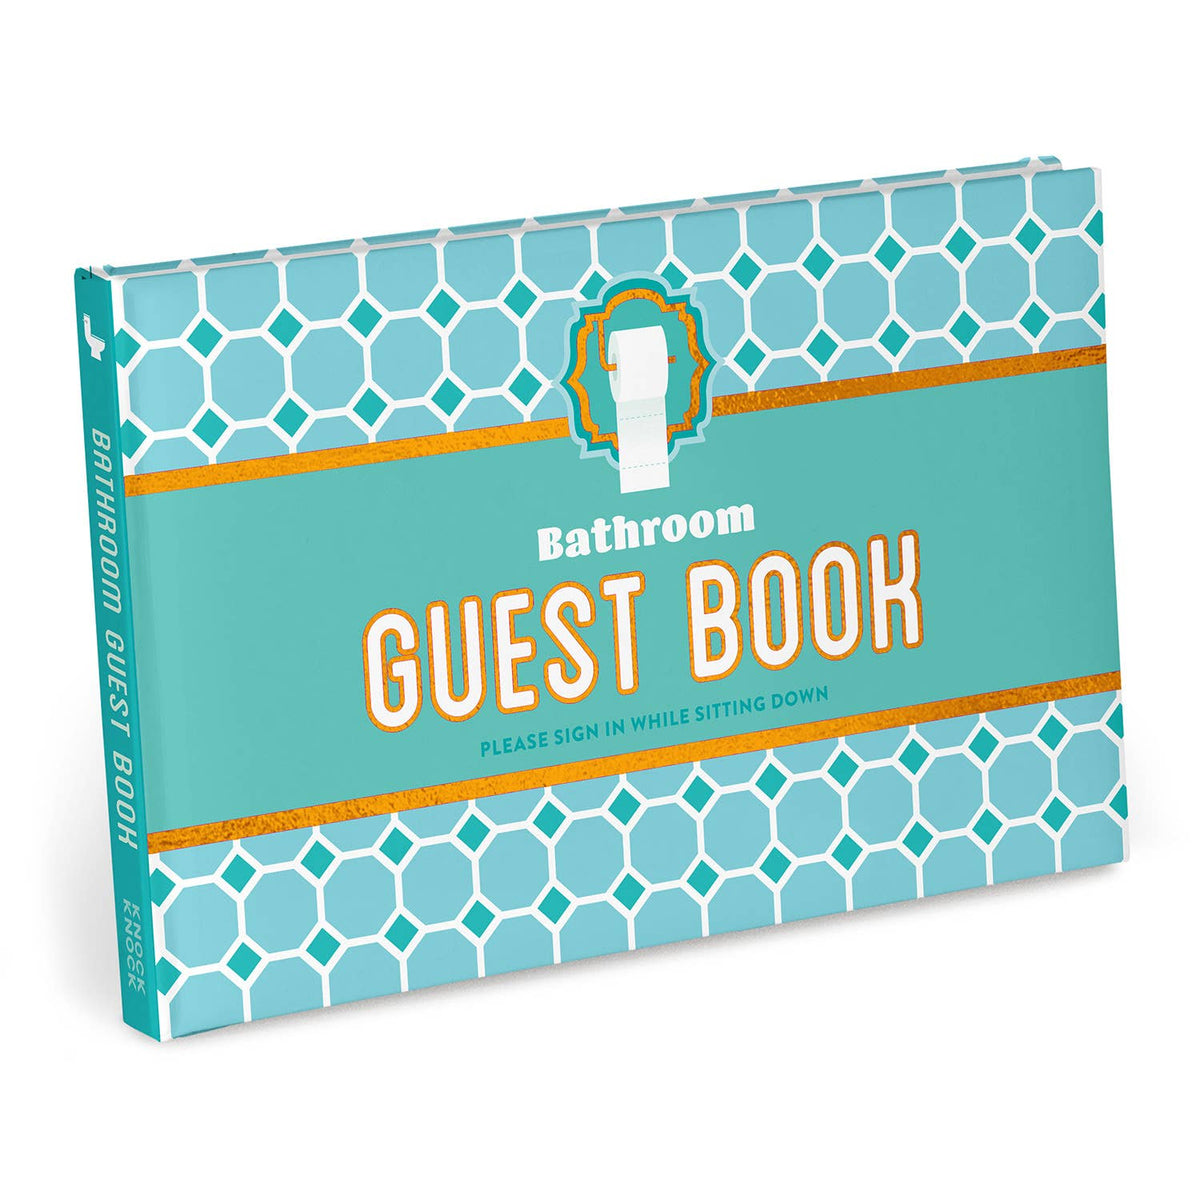 Knock Knock Bathroom Guestbook (Second Edition)